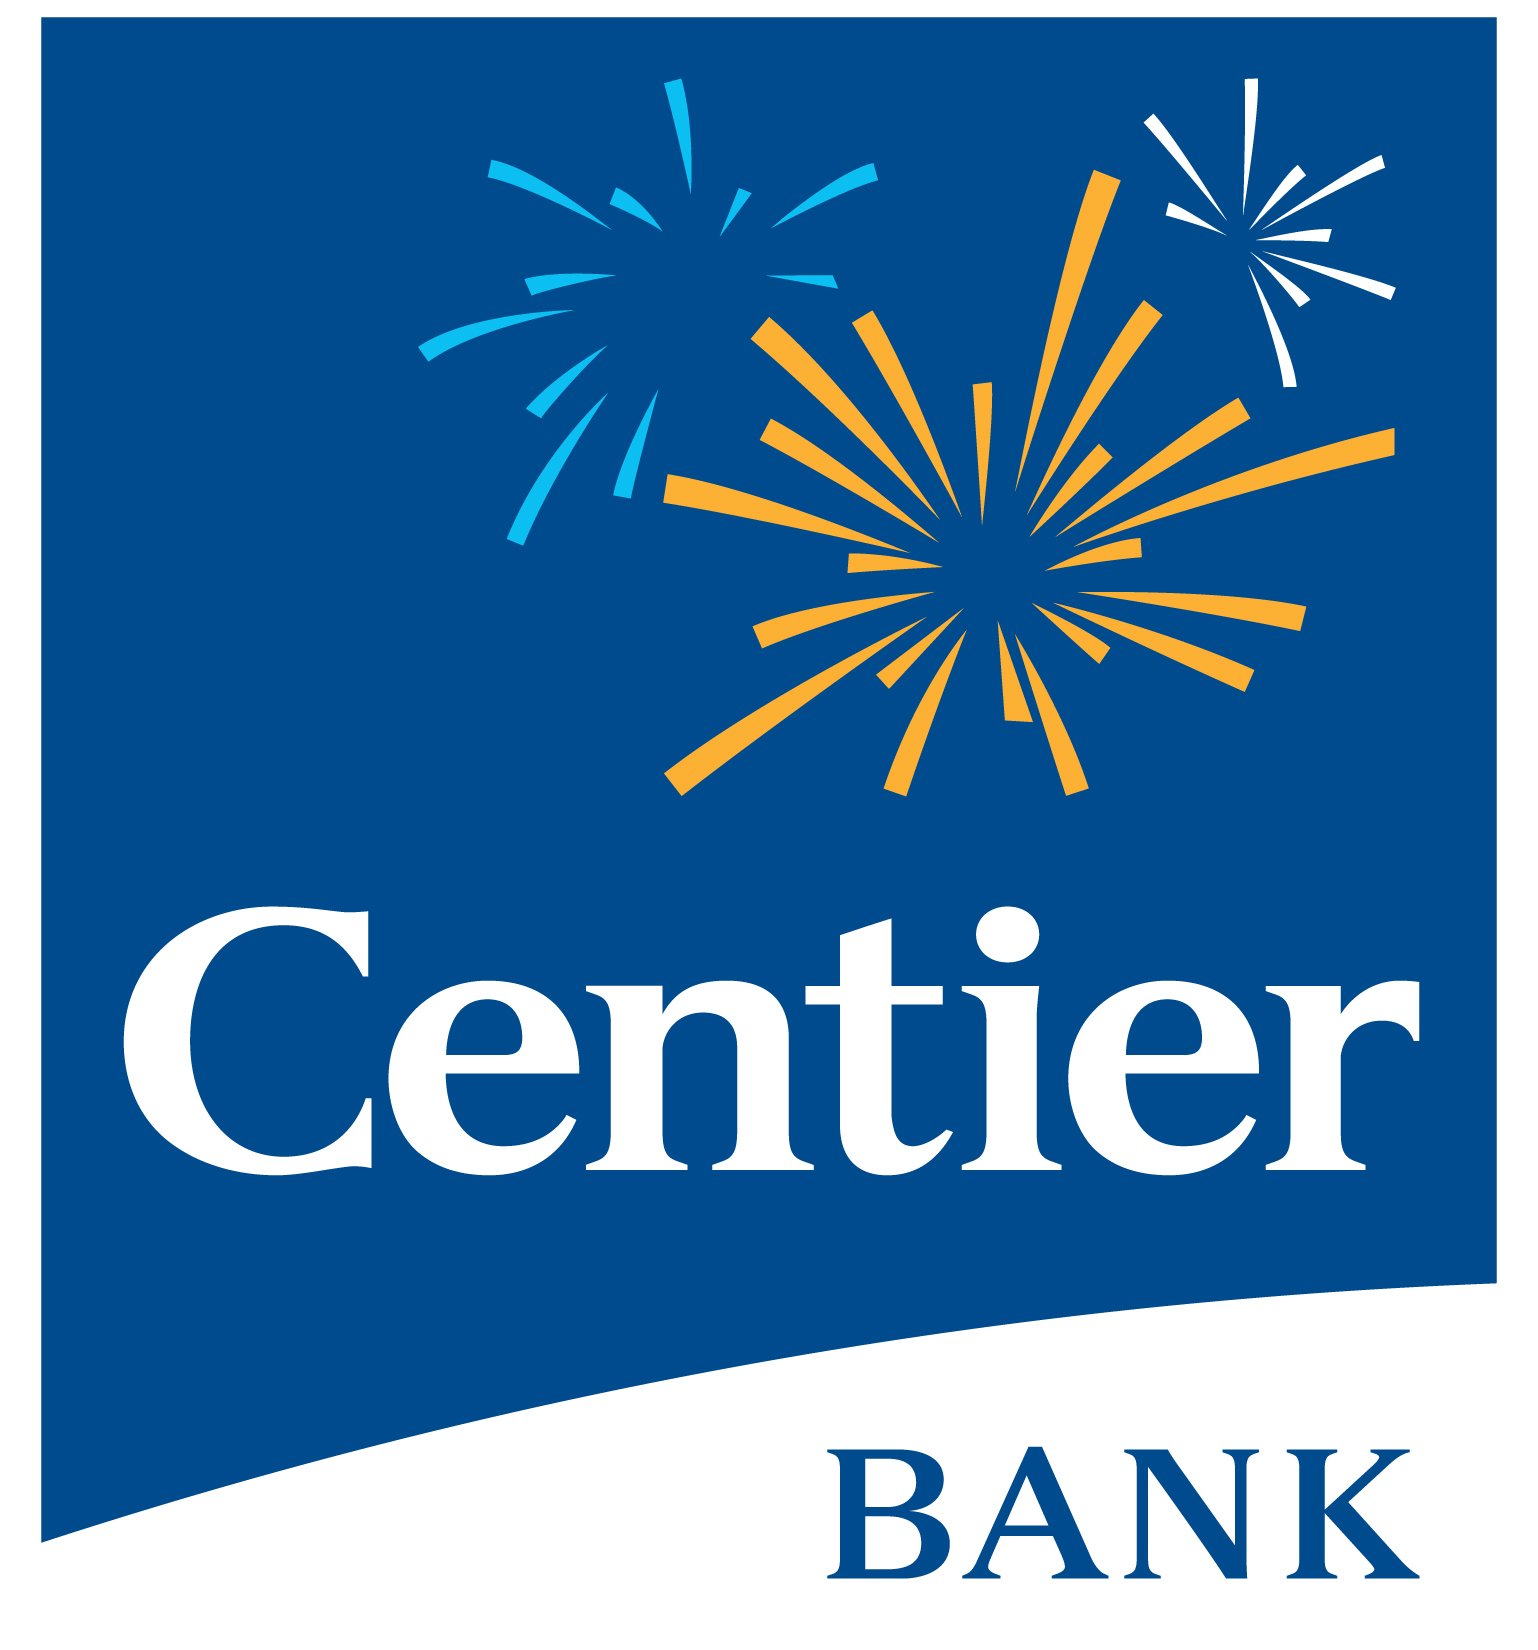 centier-bank-logo.jpg